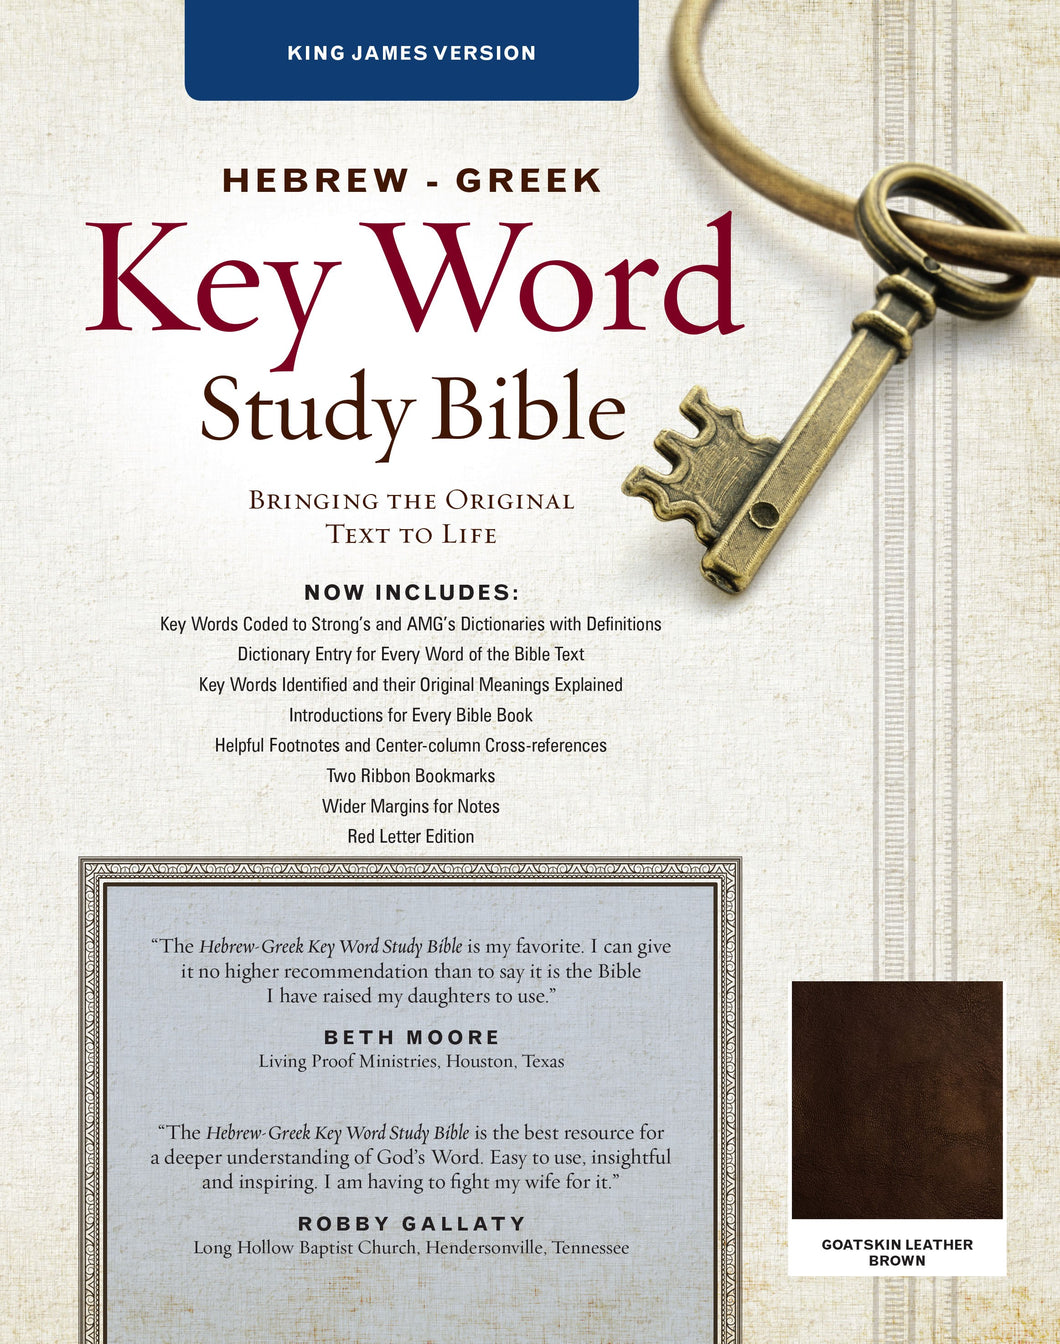 KJV Hebrew-Greek Key Word Study Bible-Brown Genuine Goat Leather